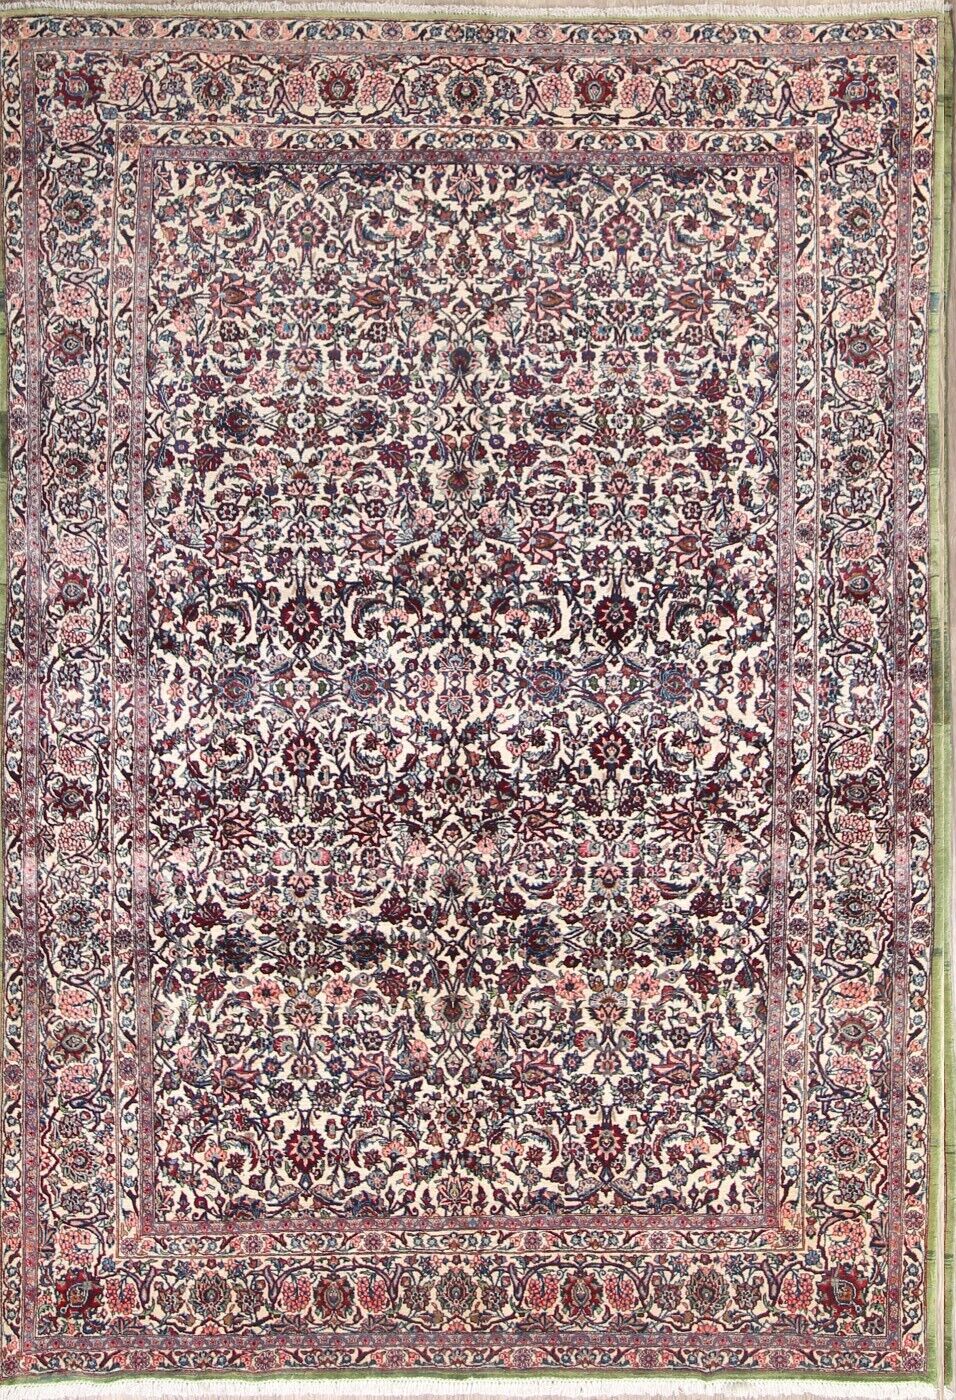 Antique Vegetable Dye Kirman Area Rug Hand-knotted Floral Oriental Carpet 7'x10'